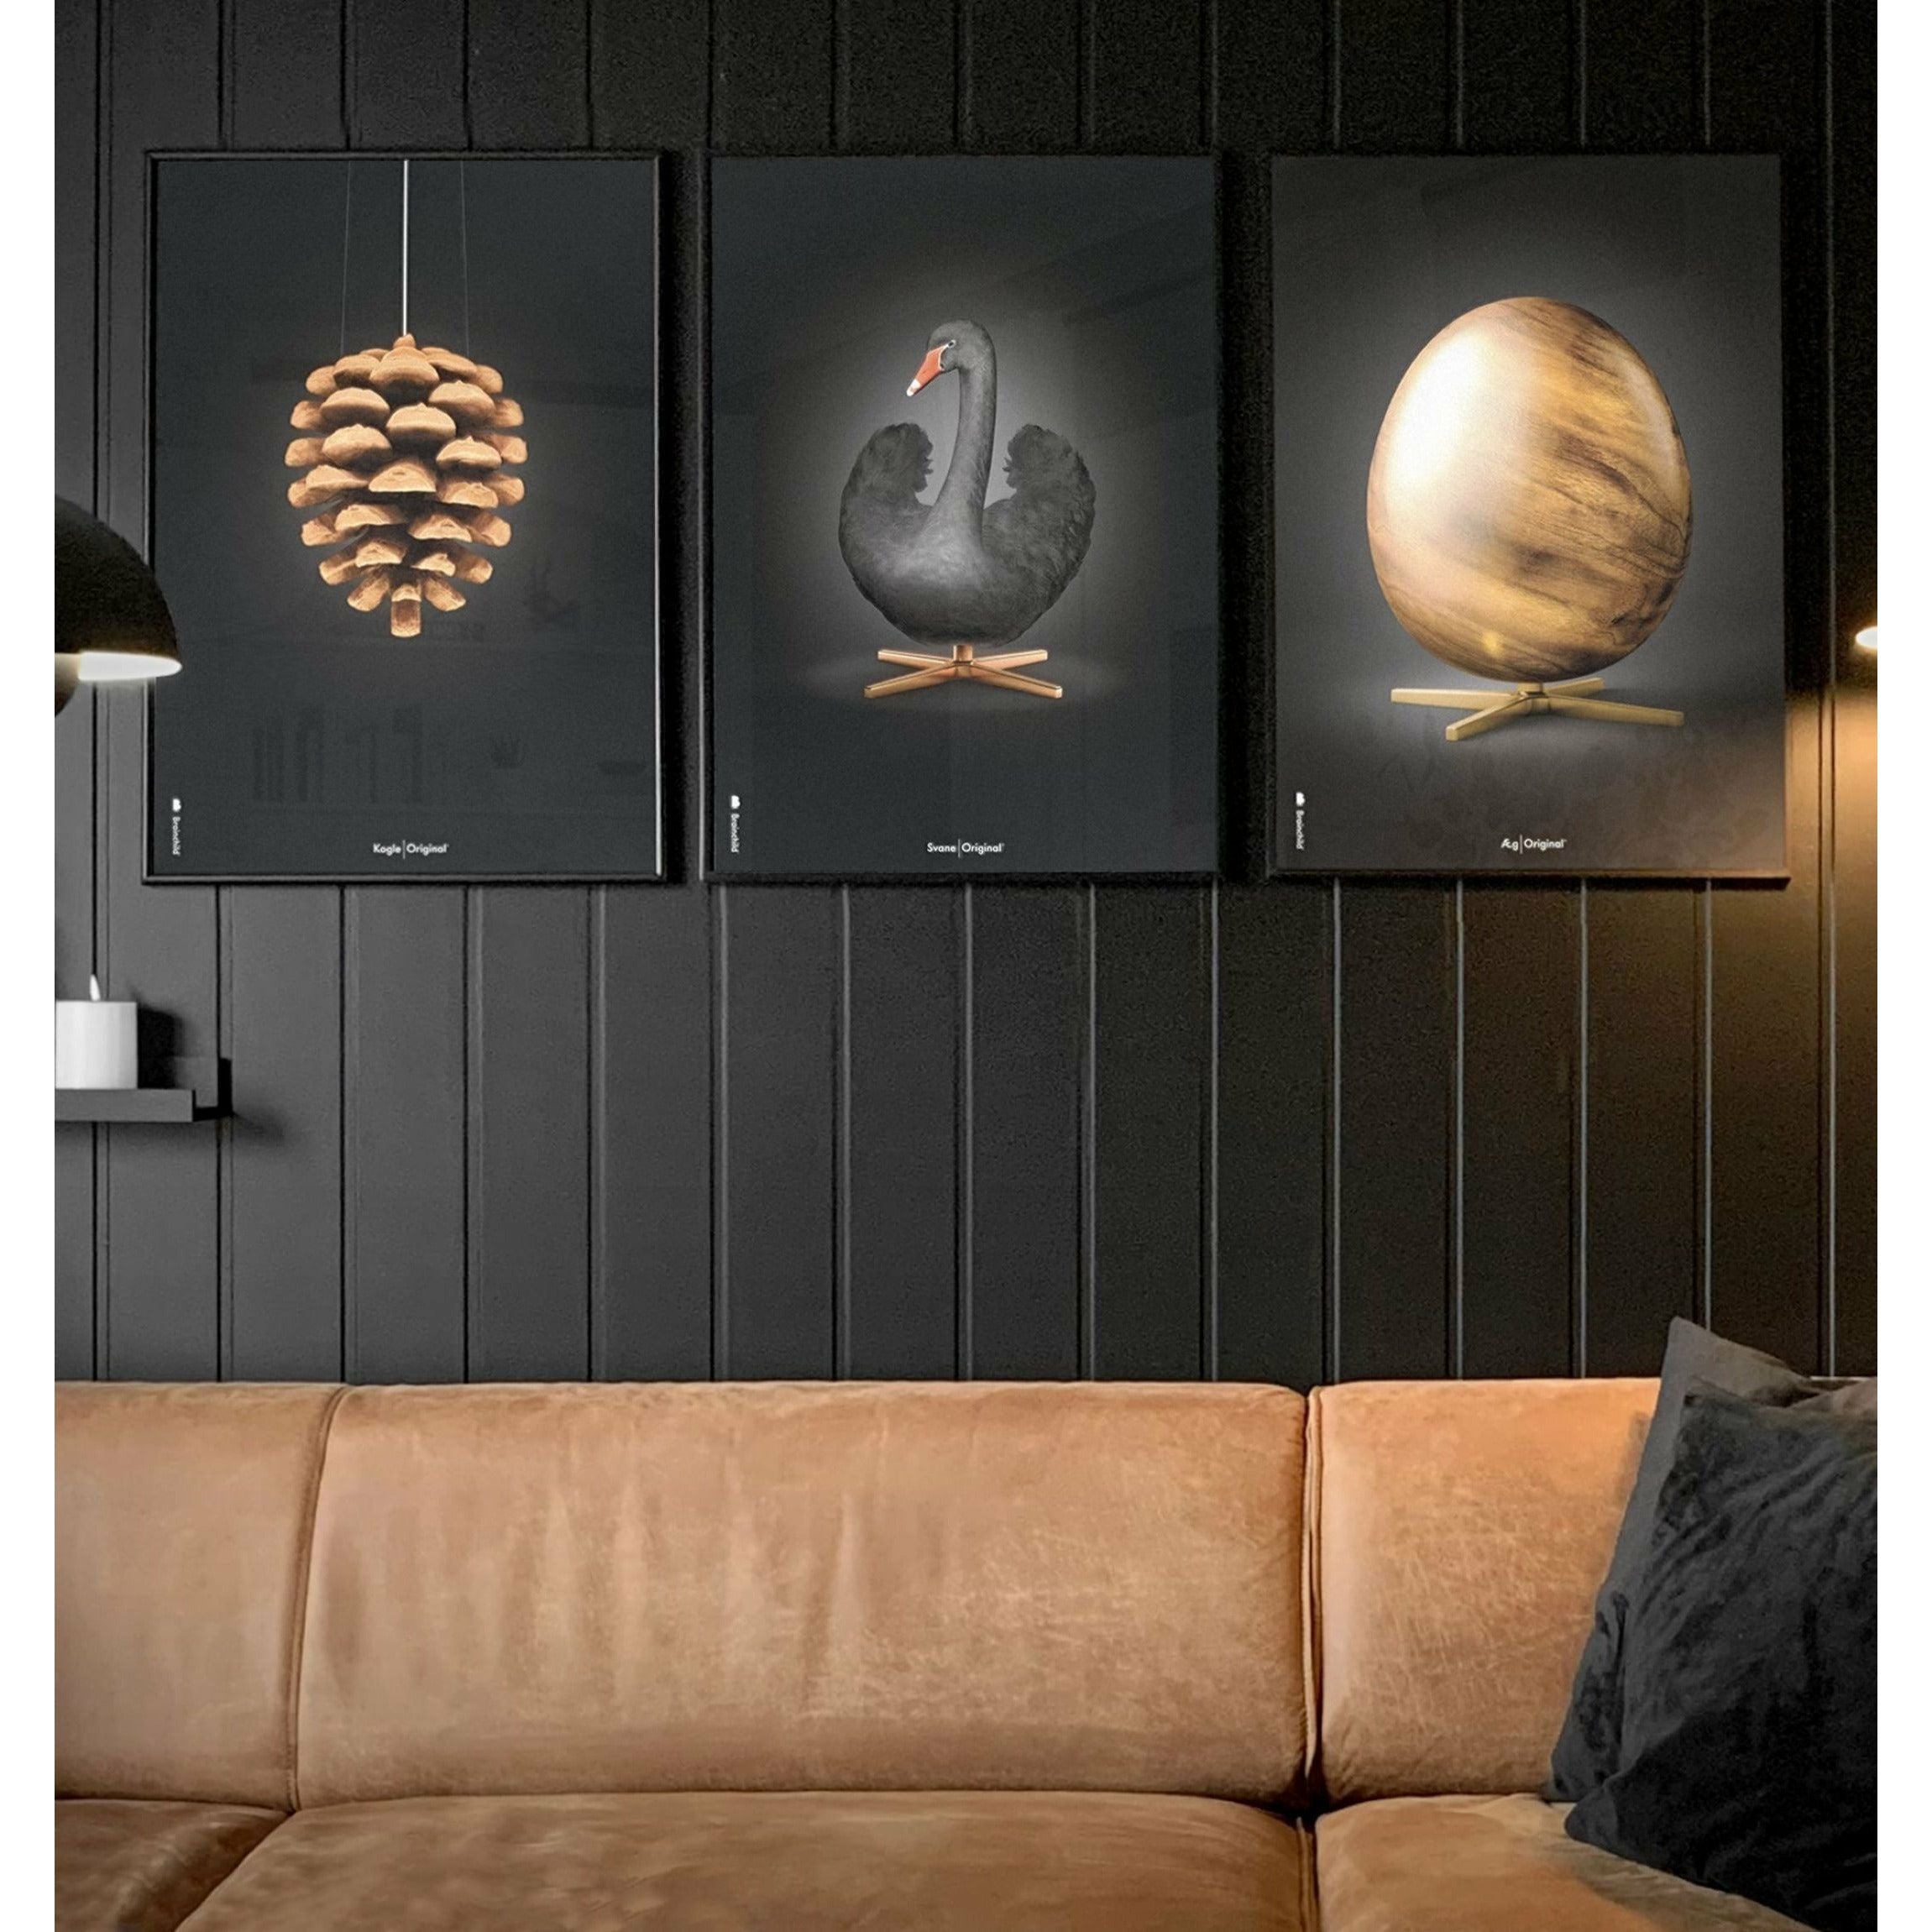 Brainchild Swan Classic Poster, Dark Wood Frame A5, svart/svart bakgrunn